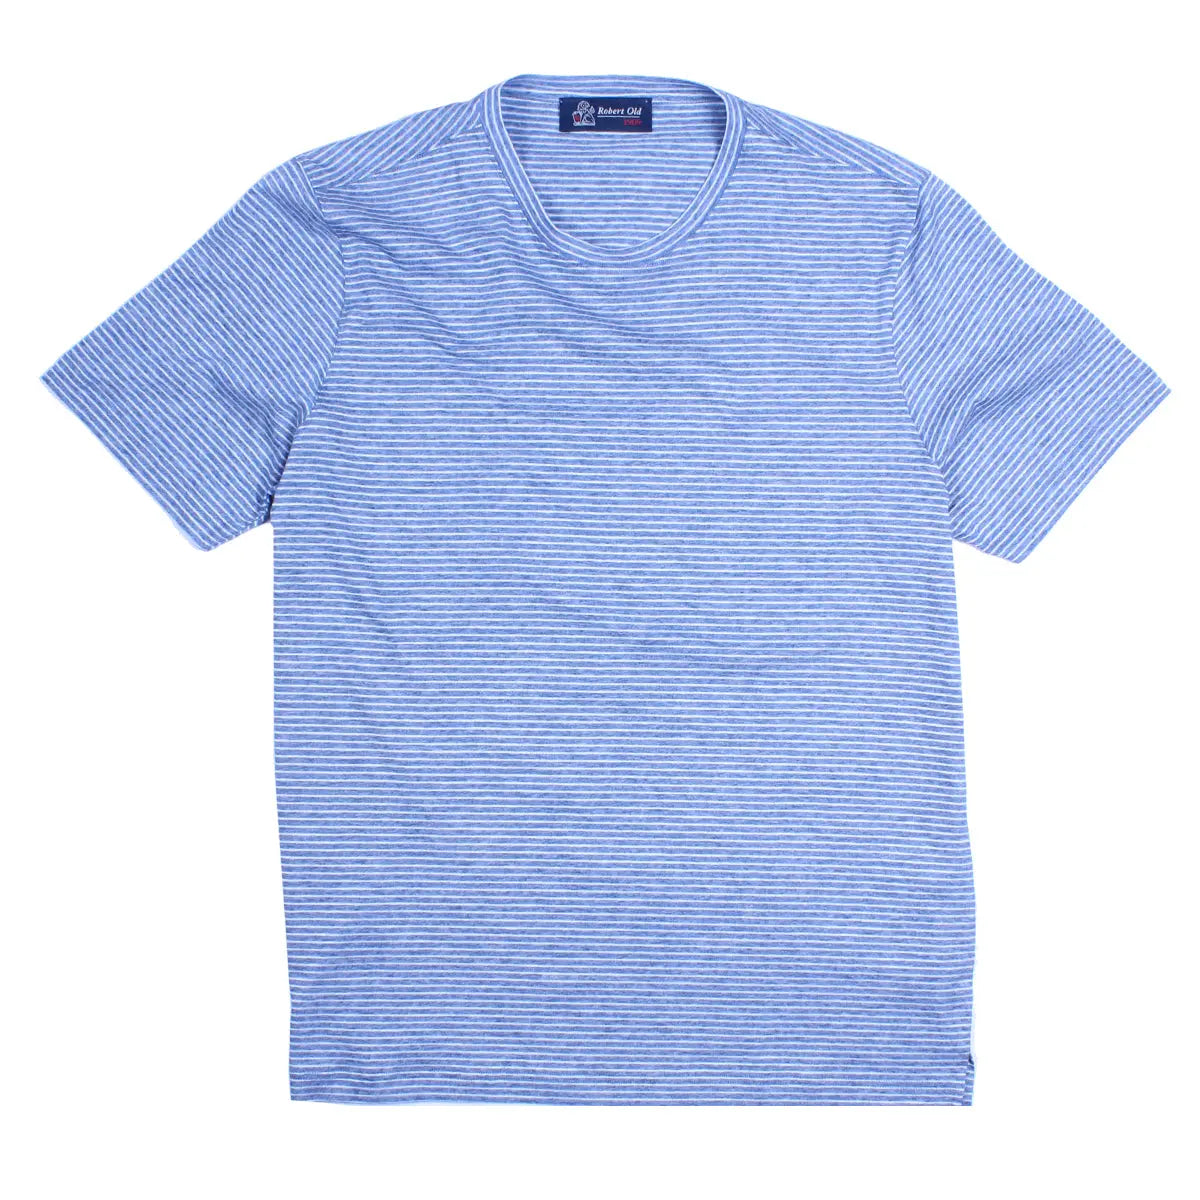 Blue Striped Mercerized Cotton T-Shirt  Robert Old   